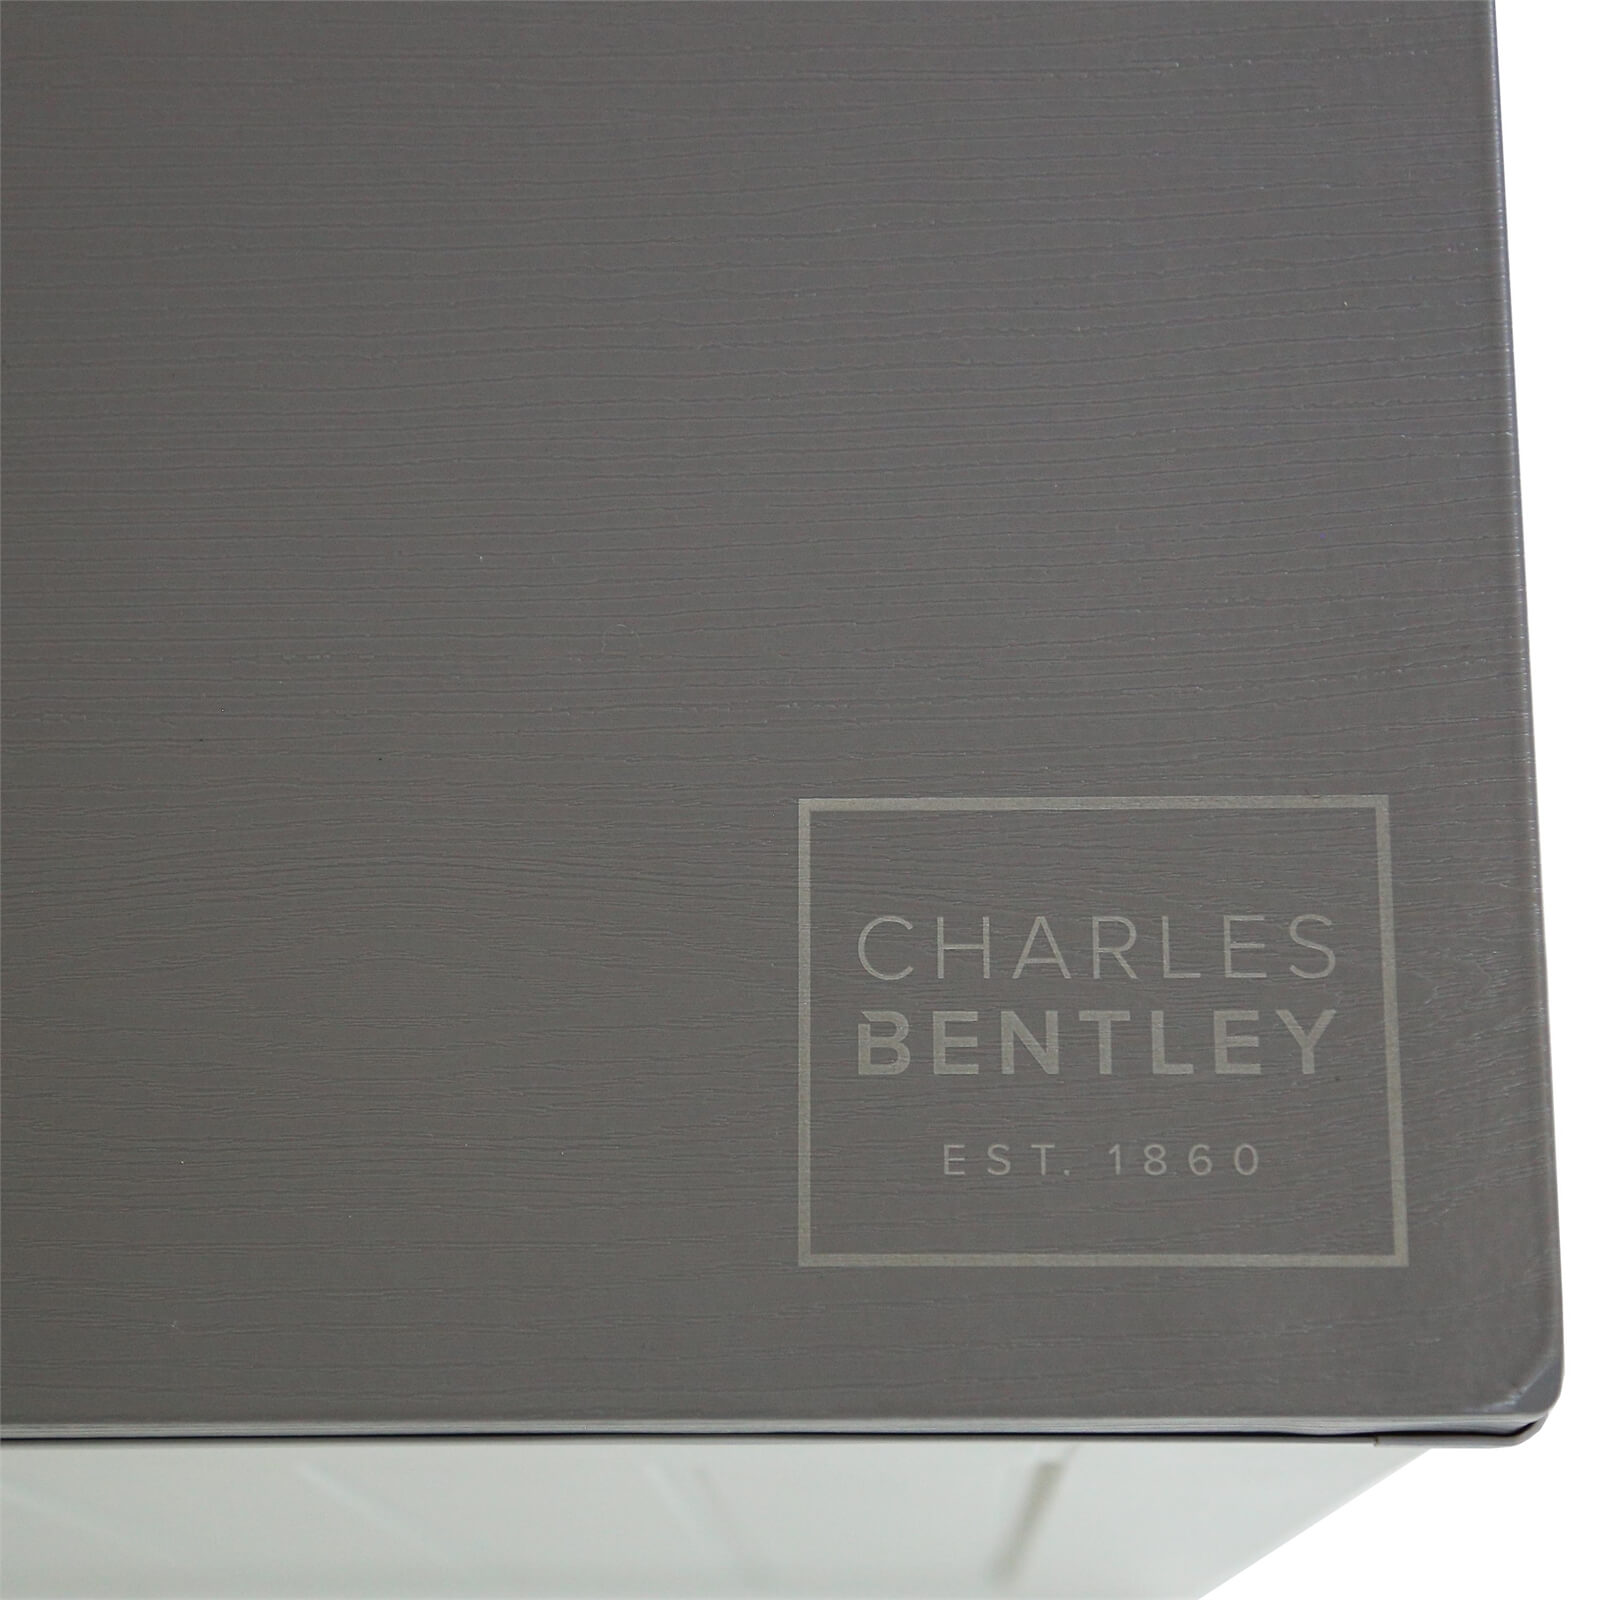 Charles Bentley 190L Outdoor Plastic Storage Box - Beige and Grey